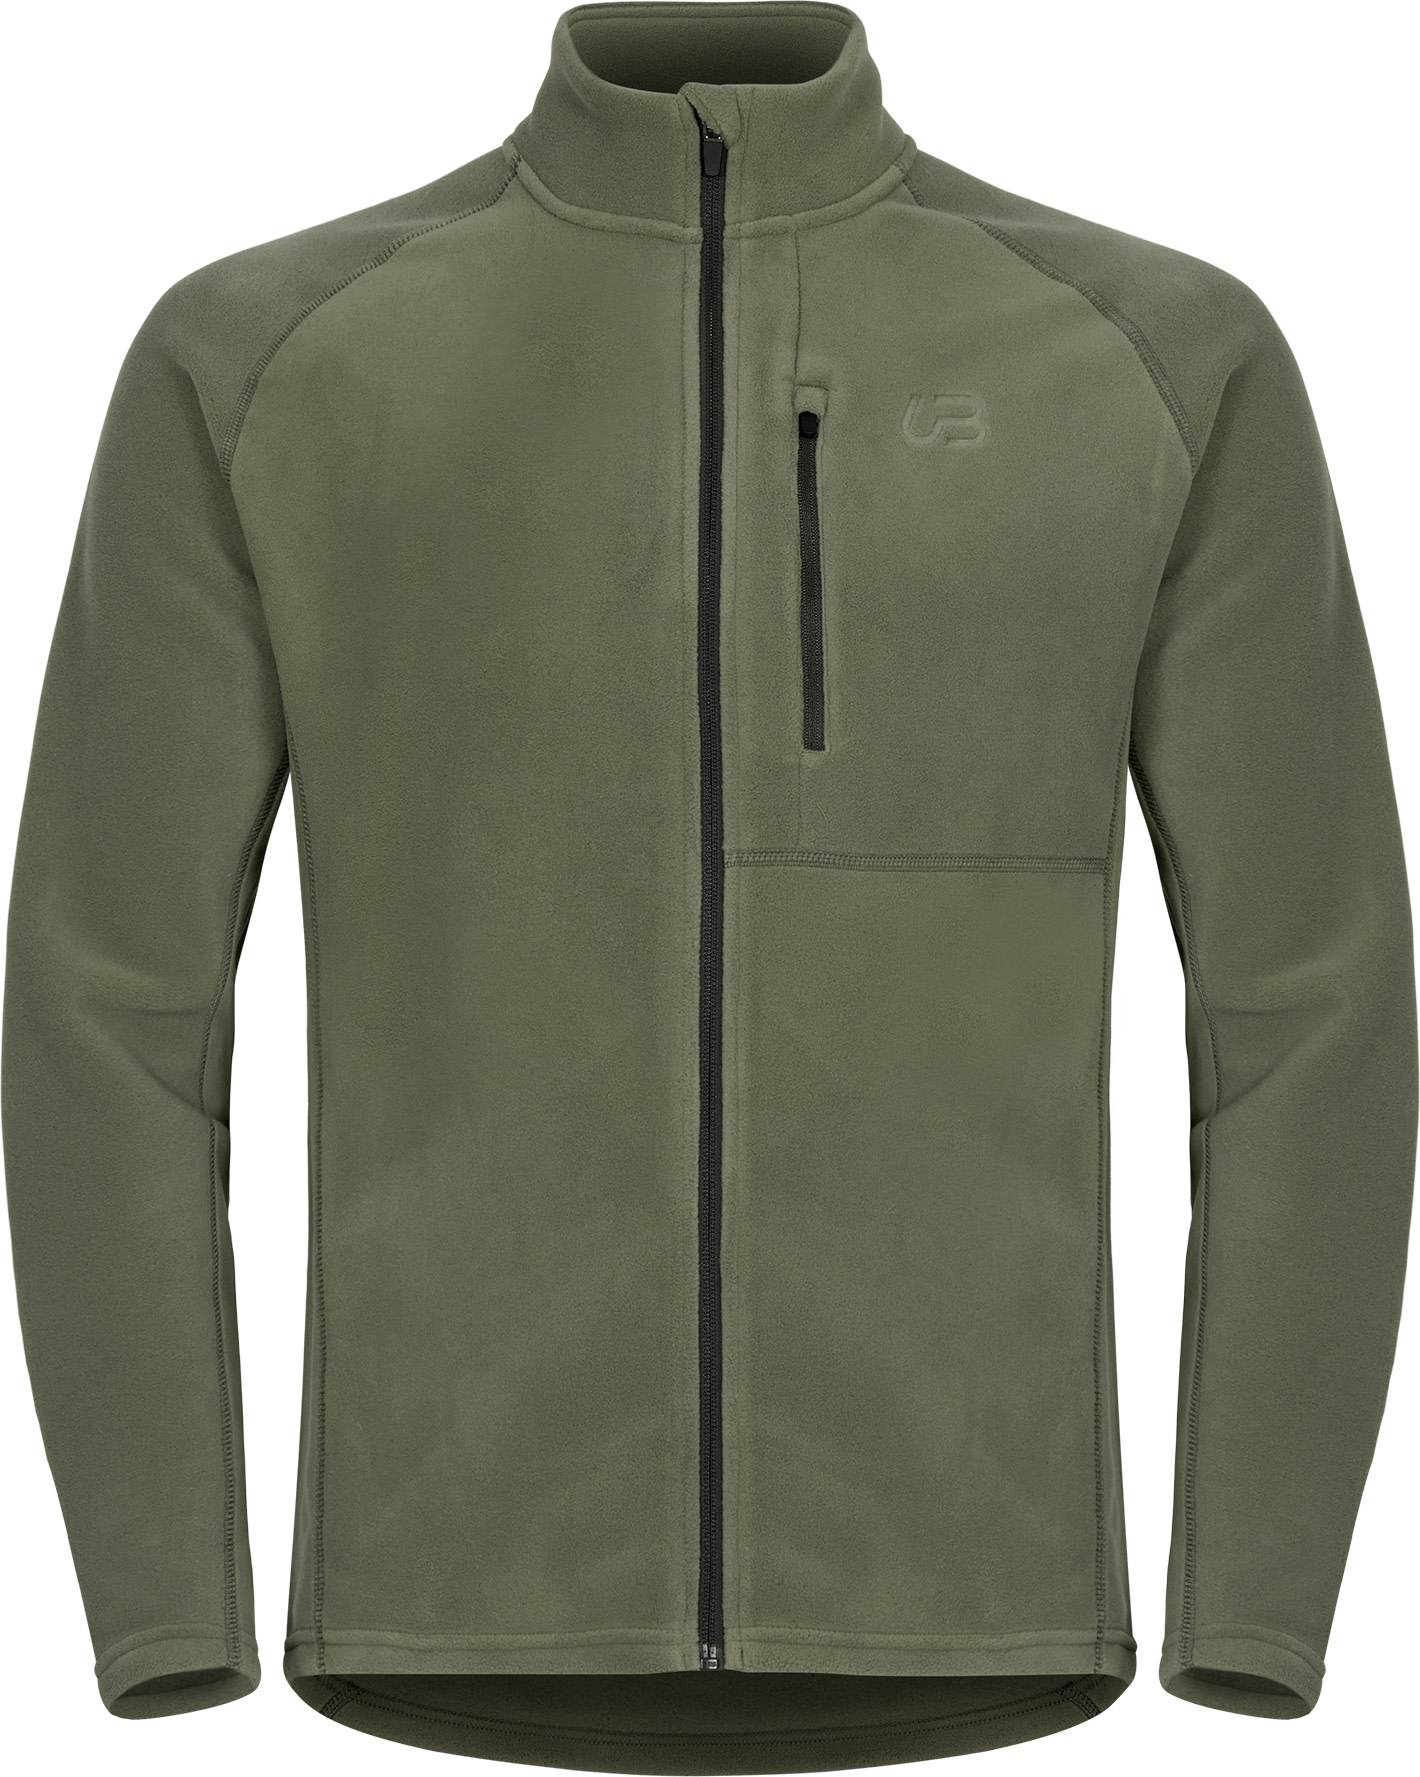 Men’s Tyldal Fleece Jacket DeepLichengreen